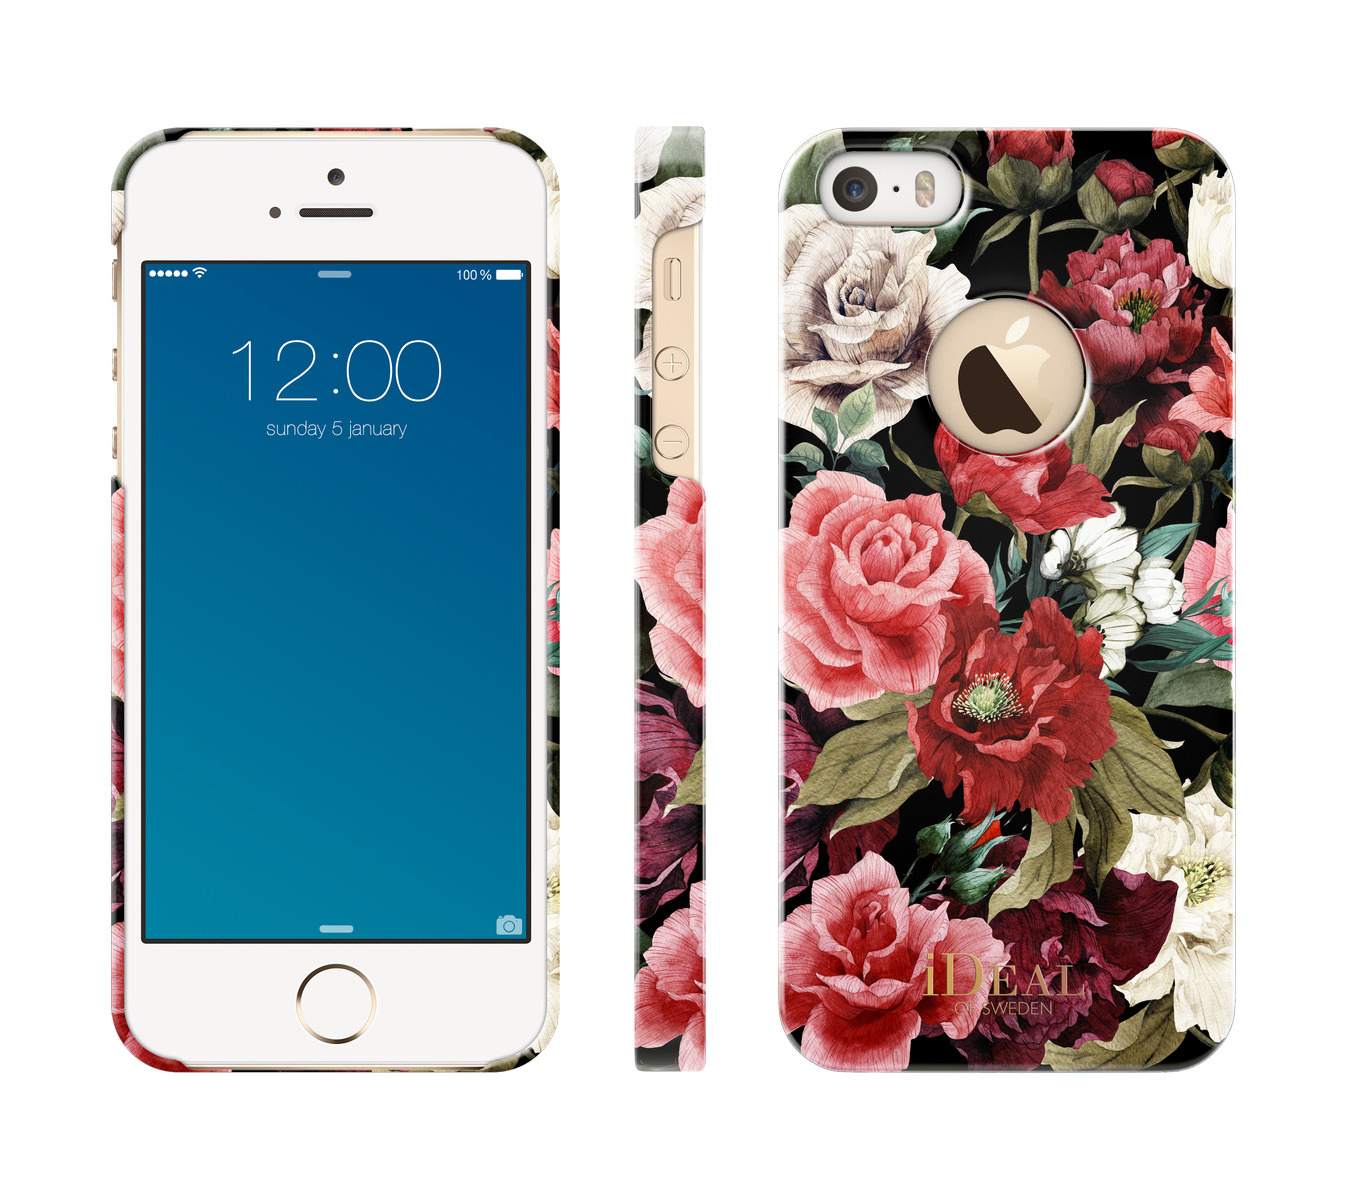 IDEAL OF SWEDEN Fashion, Backcover, Roses (2016), Antique SE Apple, iPhone